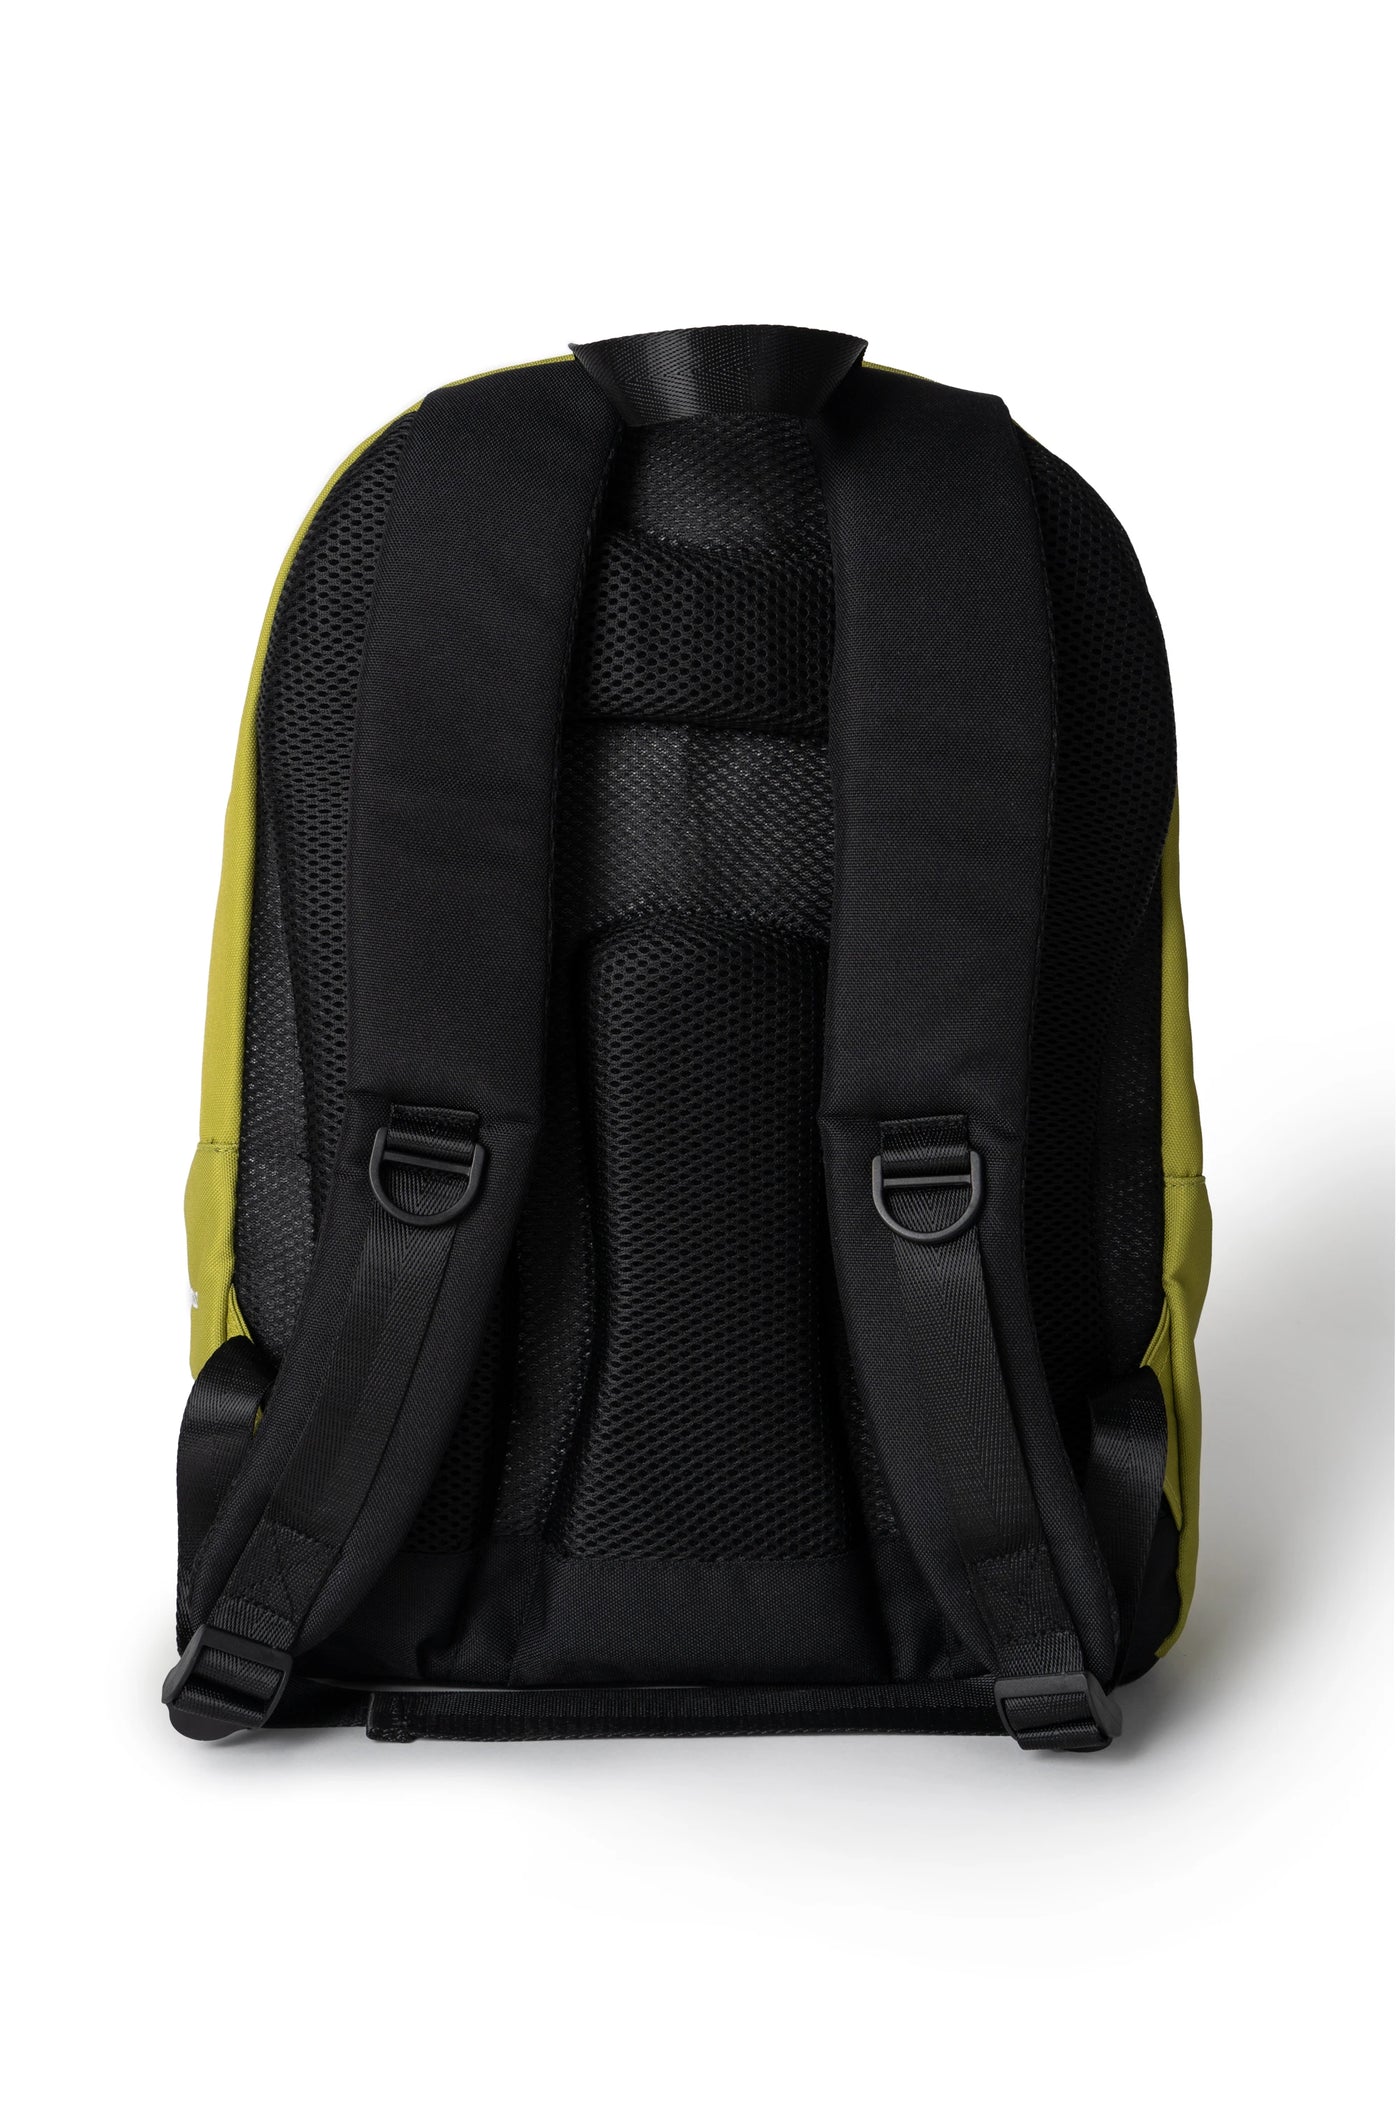 Ambar Cycle Backpack